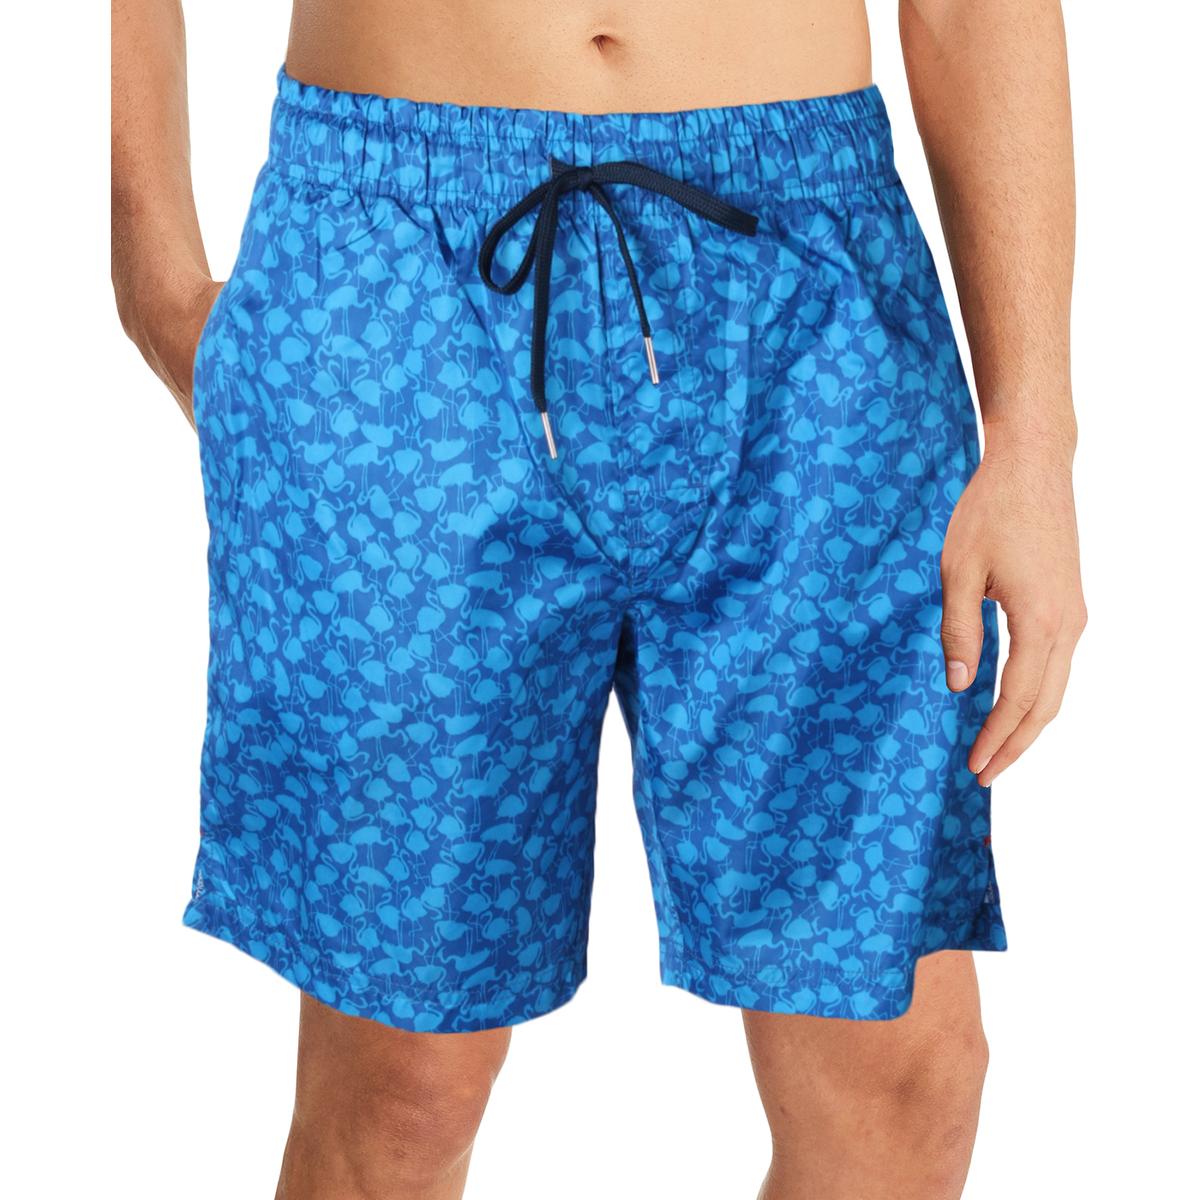 2xist Mens Catalina Blue Woven Printed Swim Trunks Swimsuit M BHFO 6847 ...